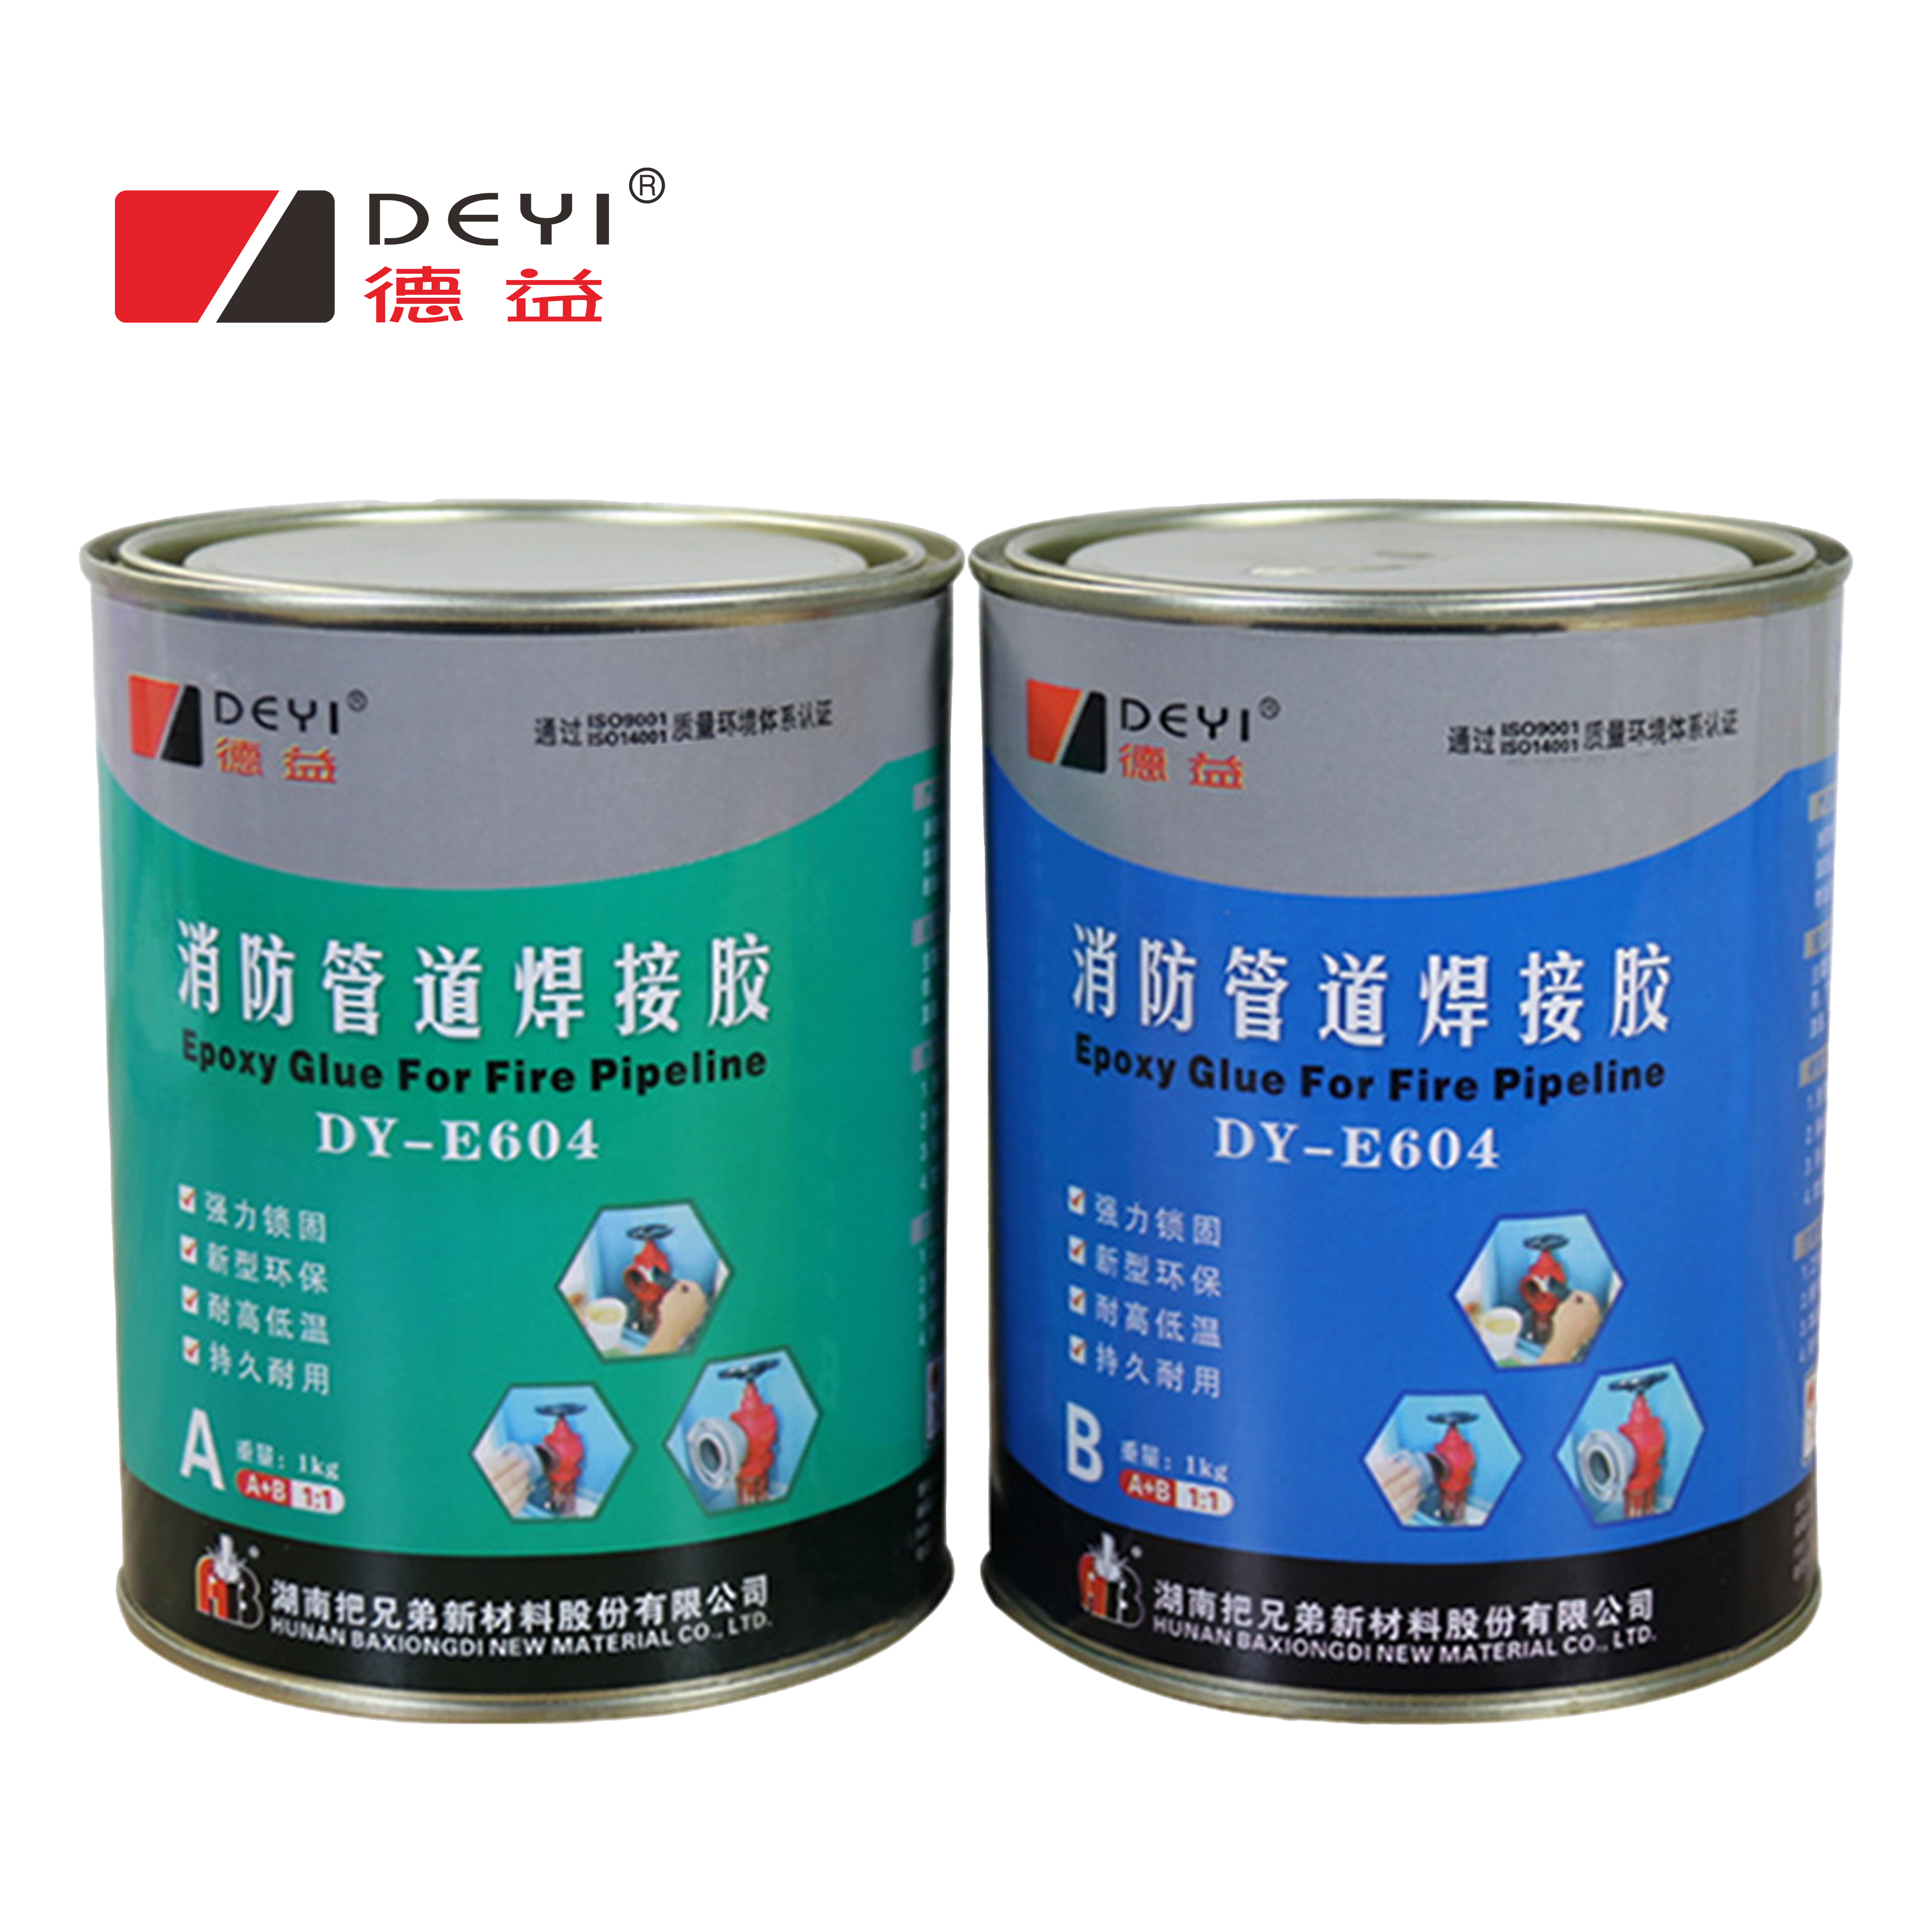 DY-E604消防管道焊接胶